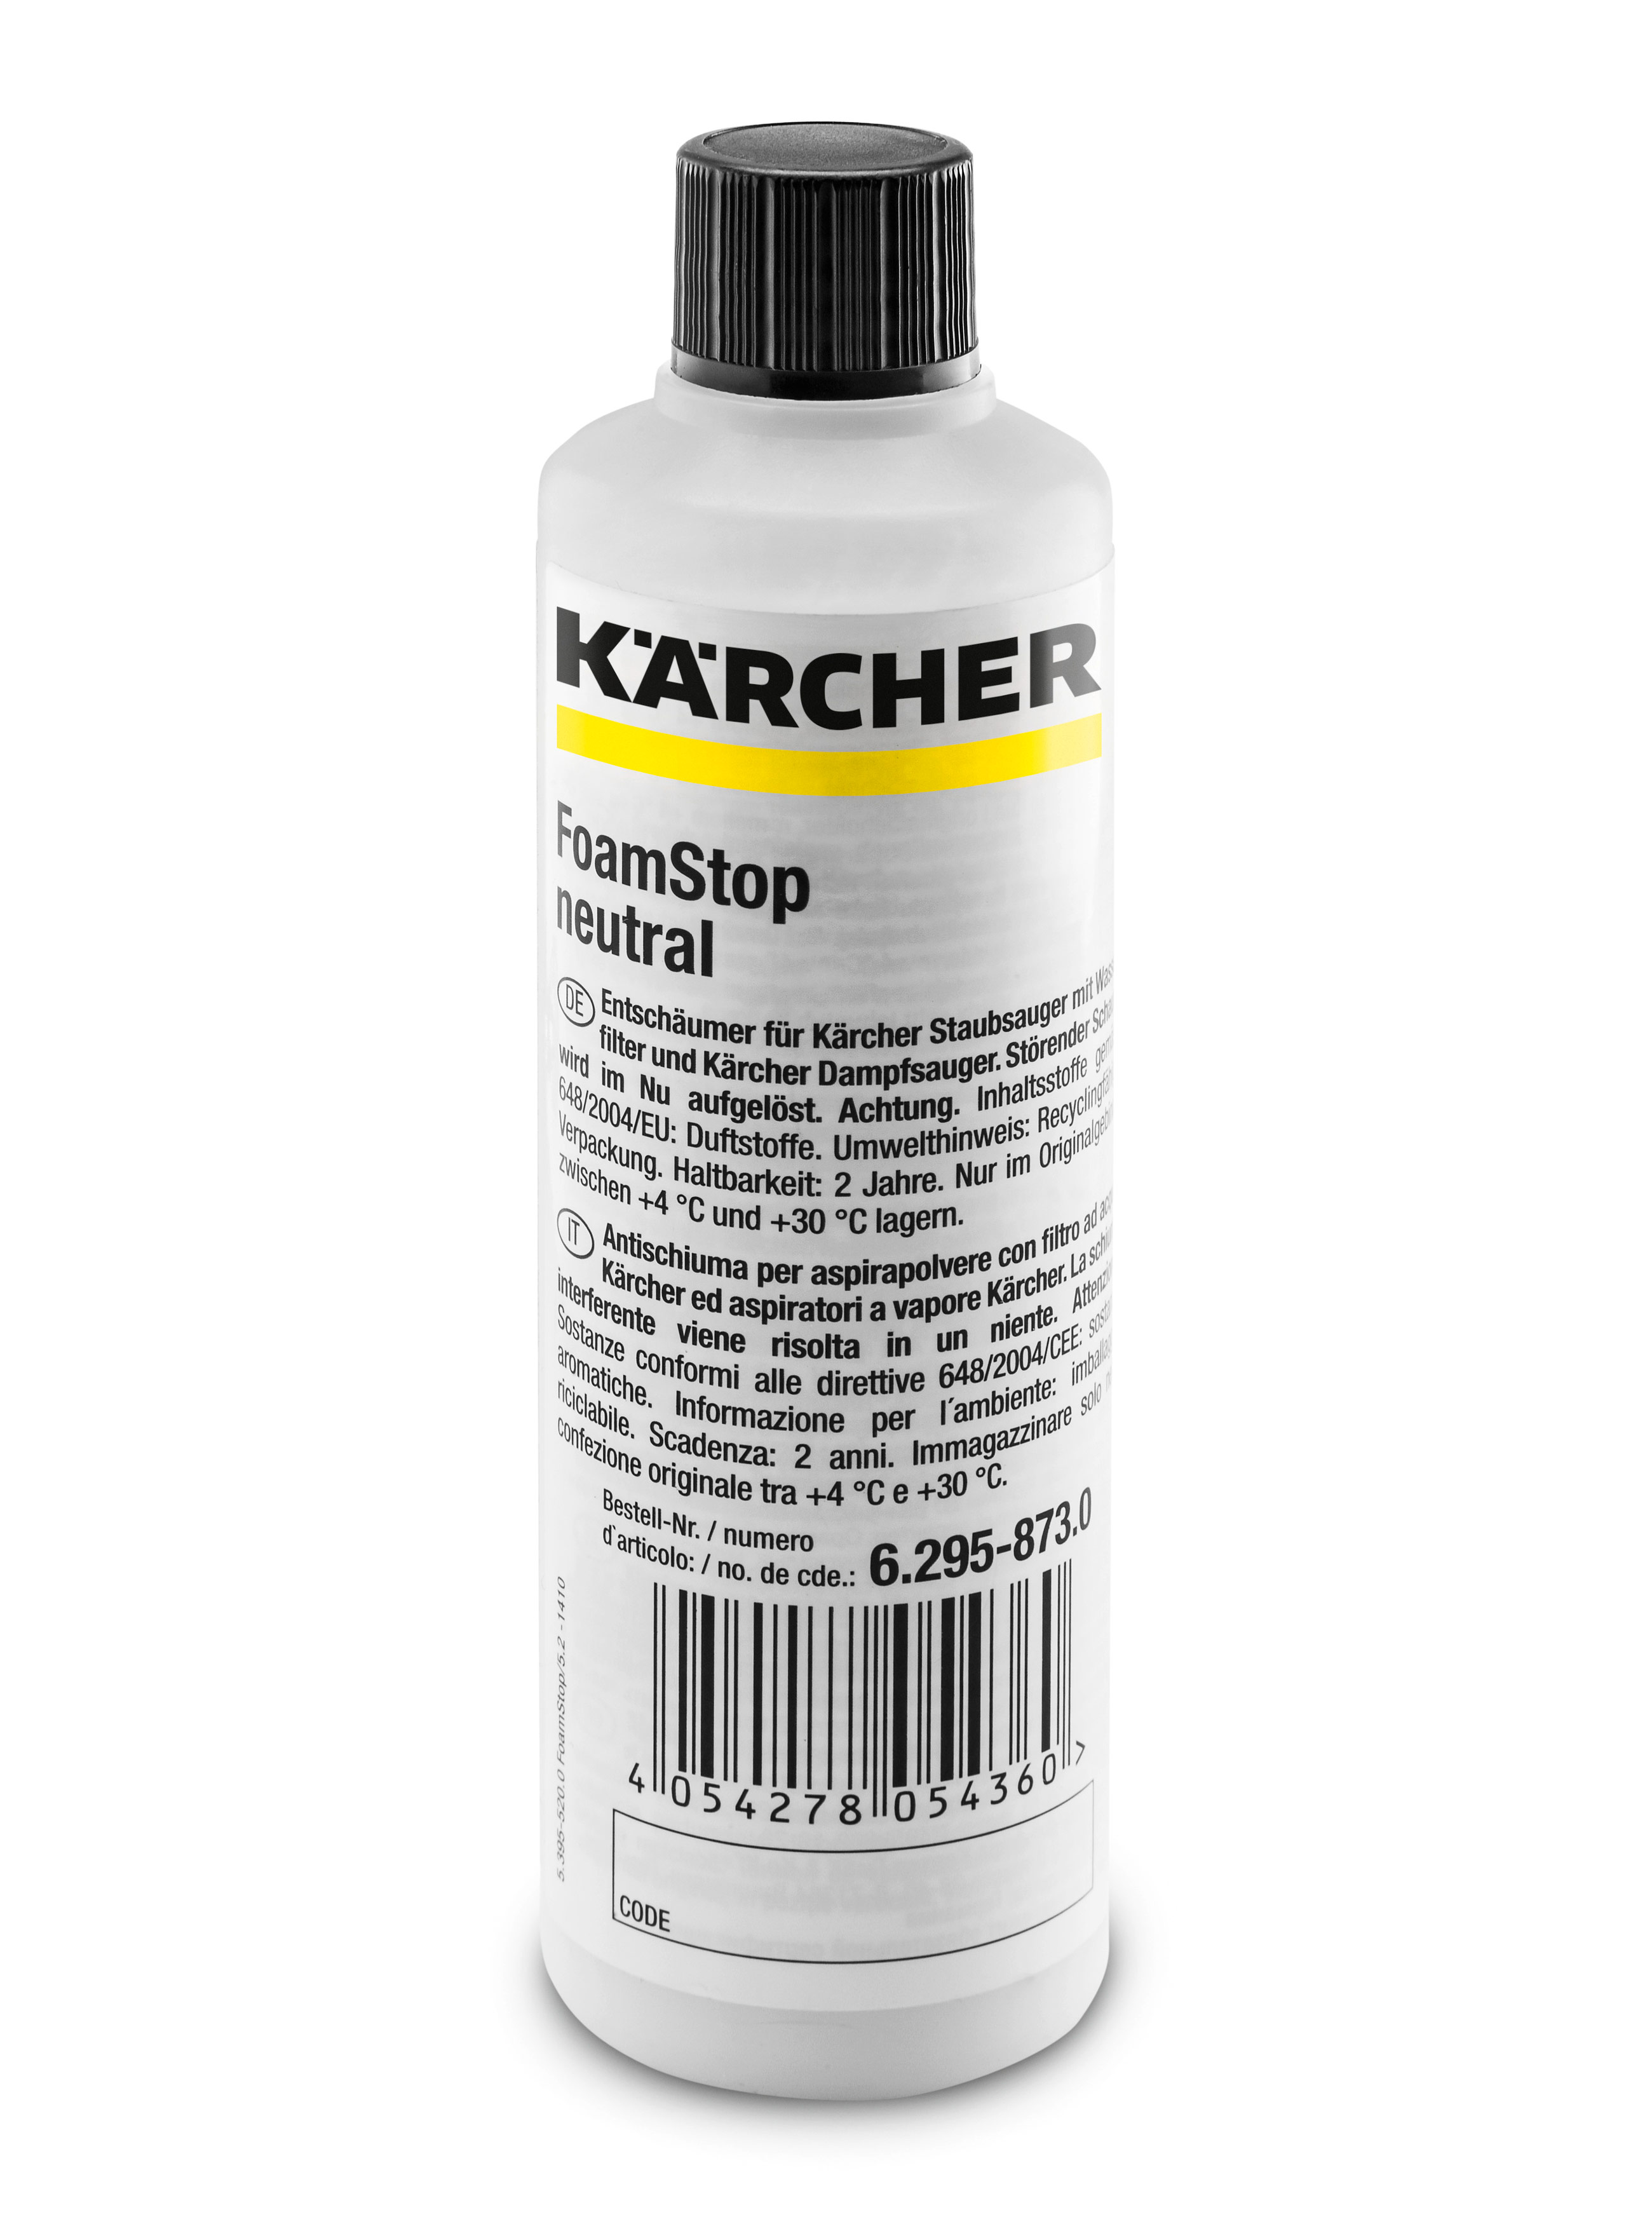 Пеногаситель Karcher 6.295-873.0 Foam Stop Neutral пеногаситель karcher 6 295 873 0 foam stop neutral